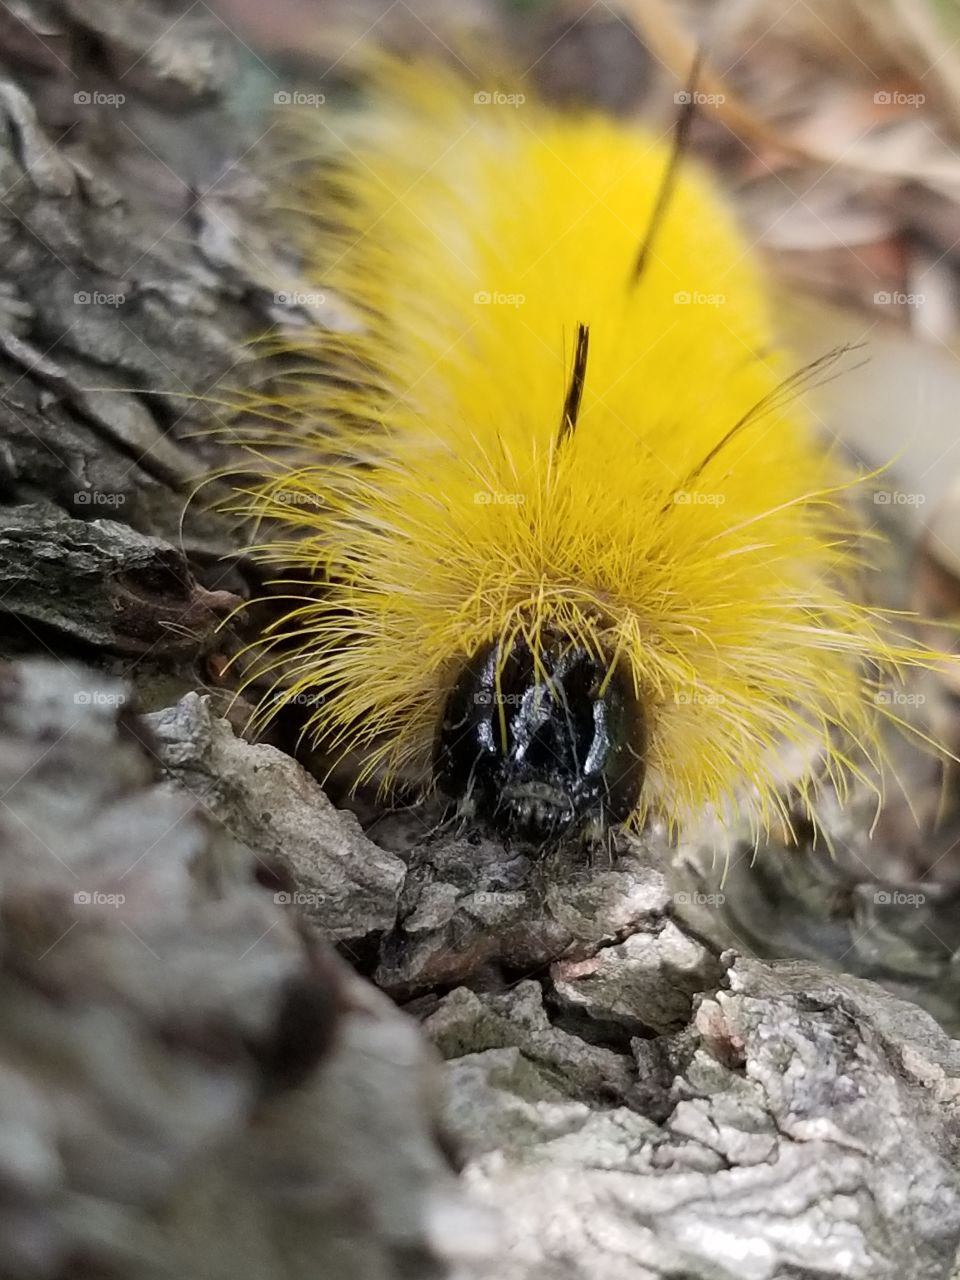 Fuzzy yellow caterpillar